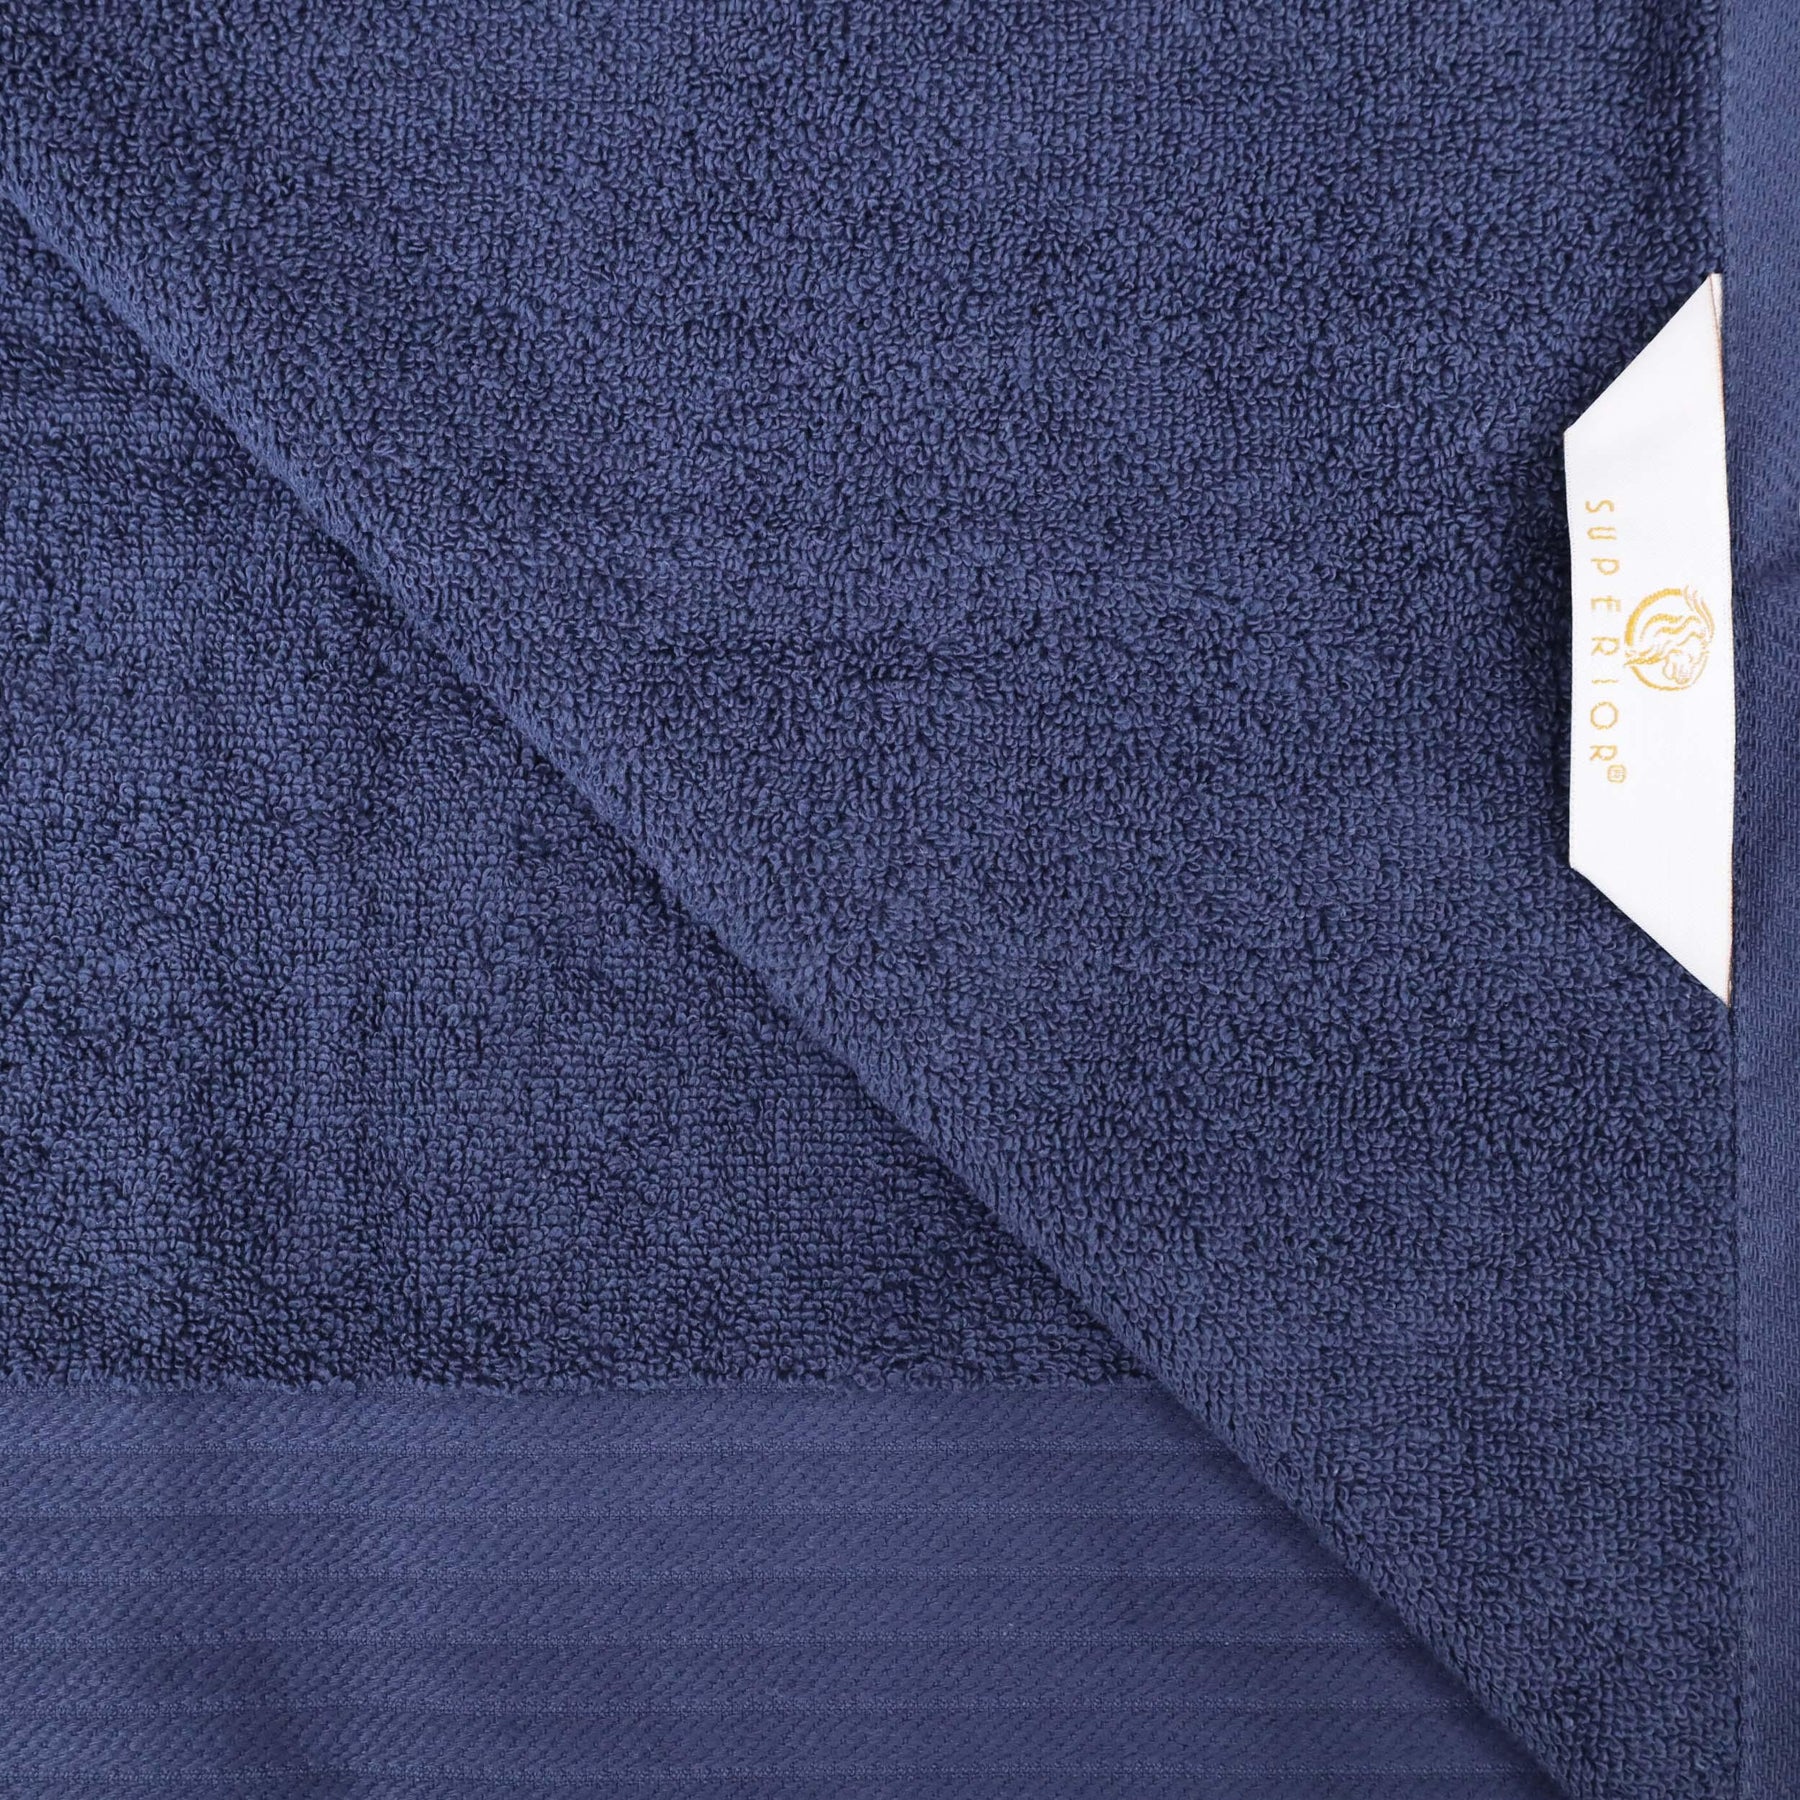 Premium Turkish Cotton Jacquard Herringbone and Solid 6-Piece Hand Towel Set- Navy Blue